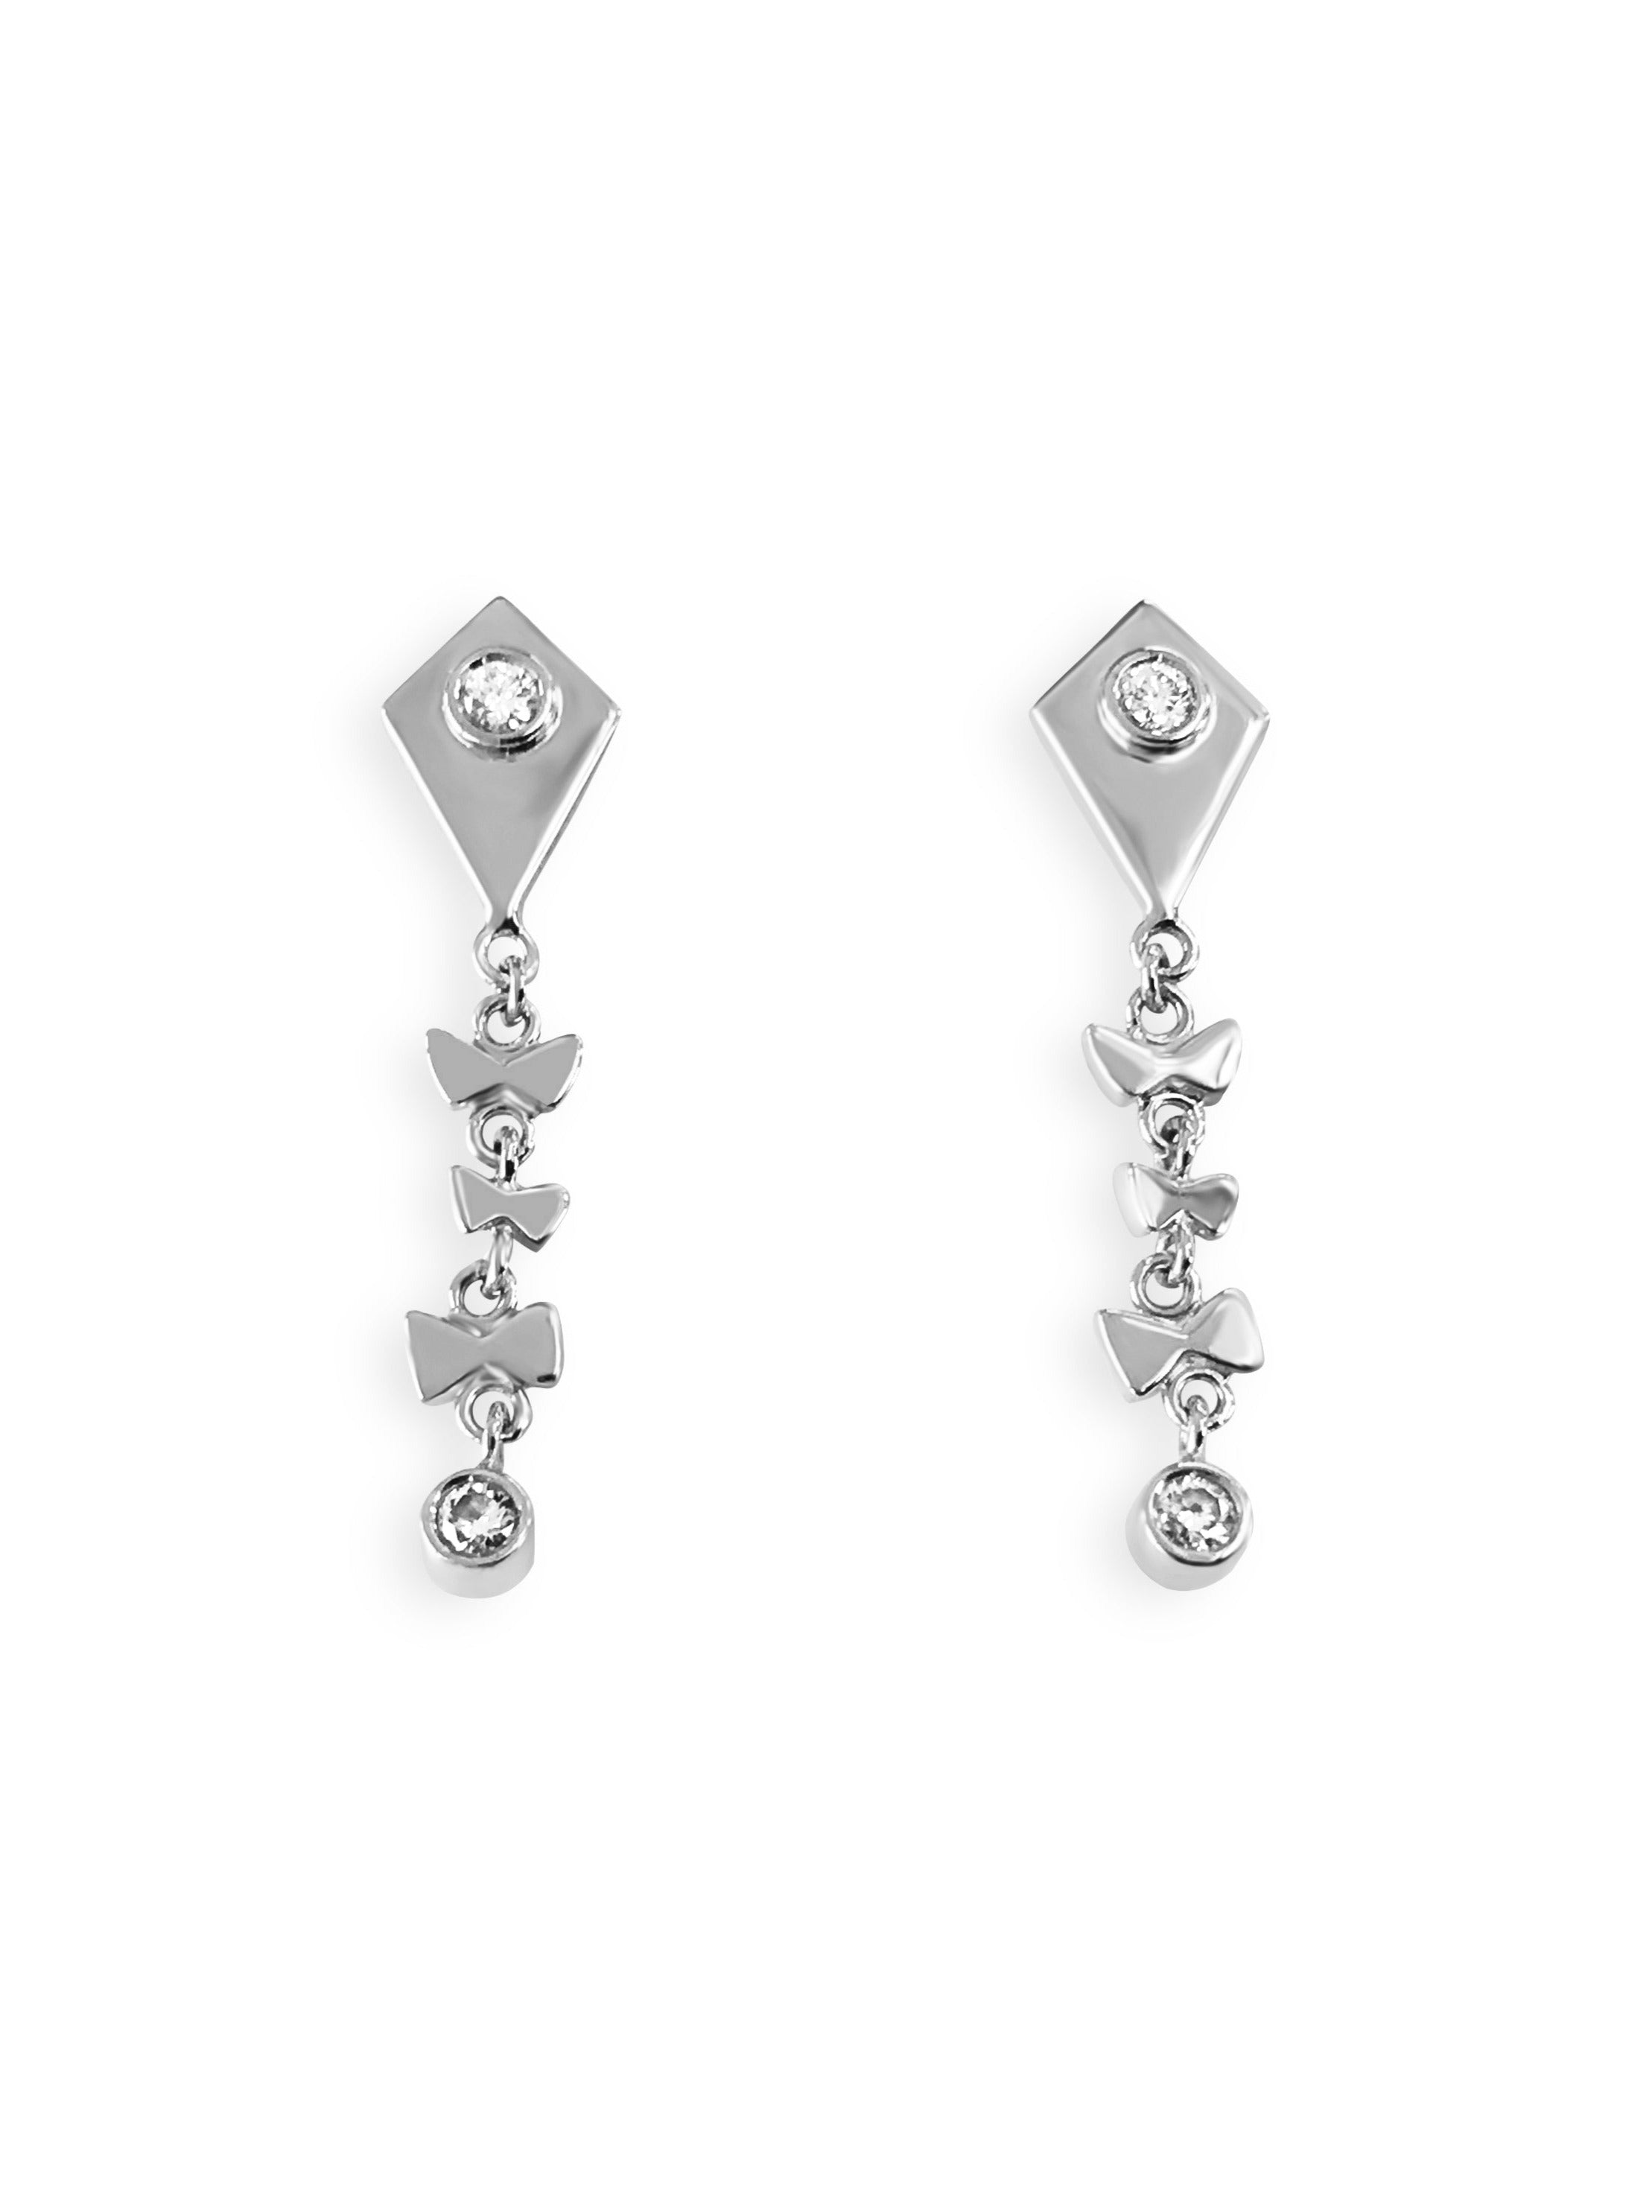 Kite - Earrings with gleaming diamonds